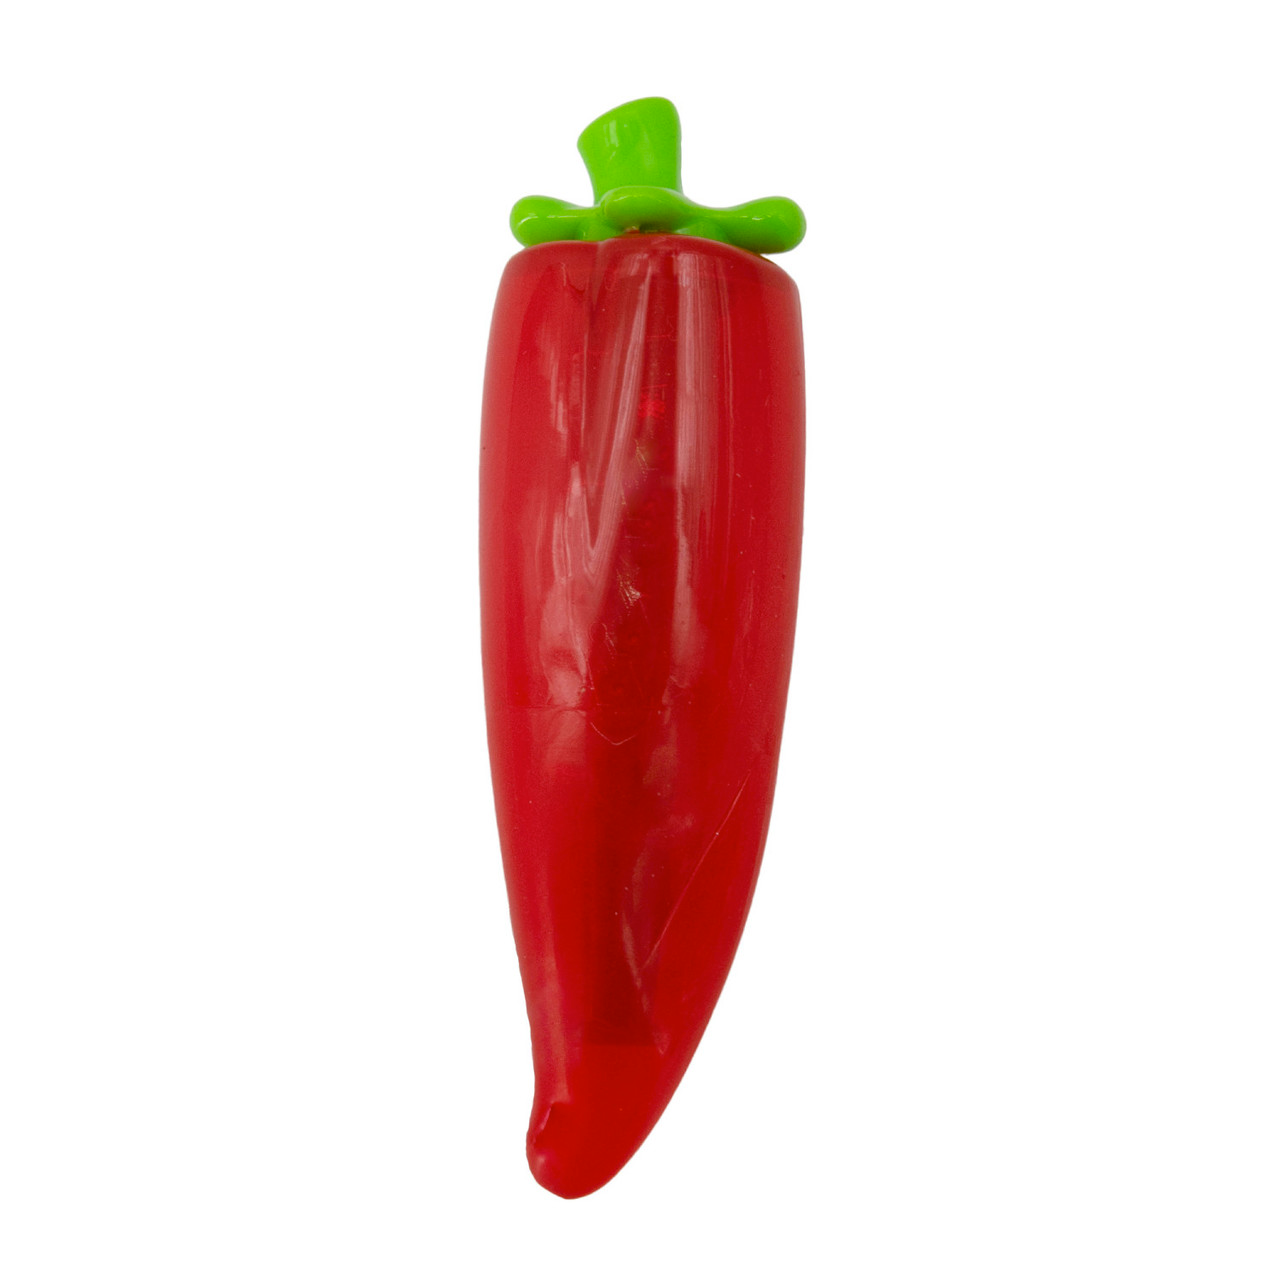 Petstages - Crunch Veggie - Red Pepper